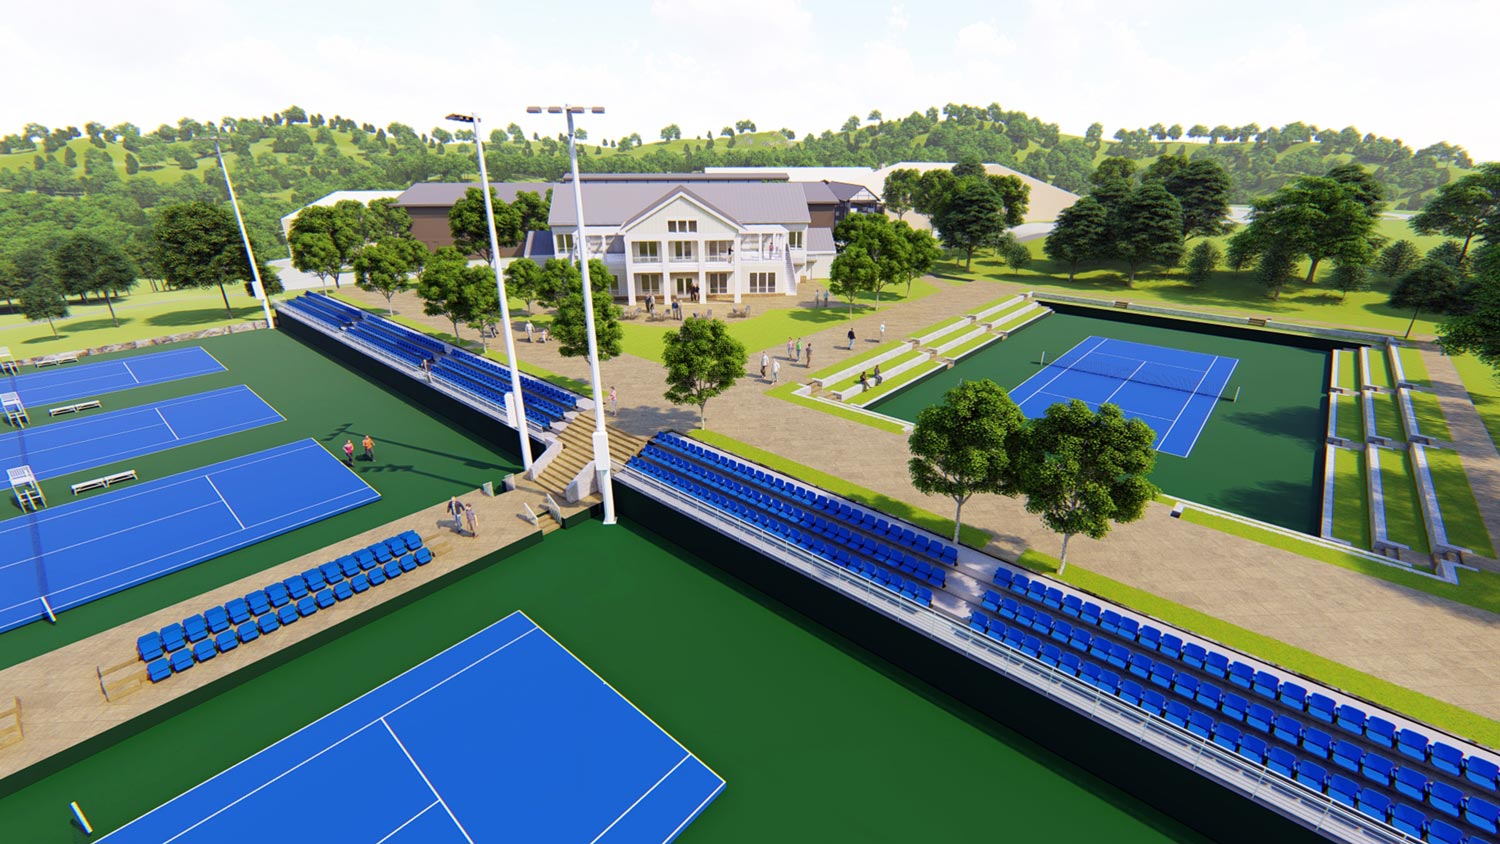  Boar’s Head Sports Club, tennis courts, and bleachers 